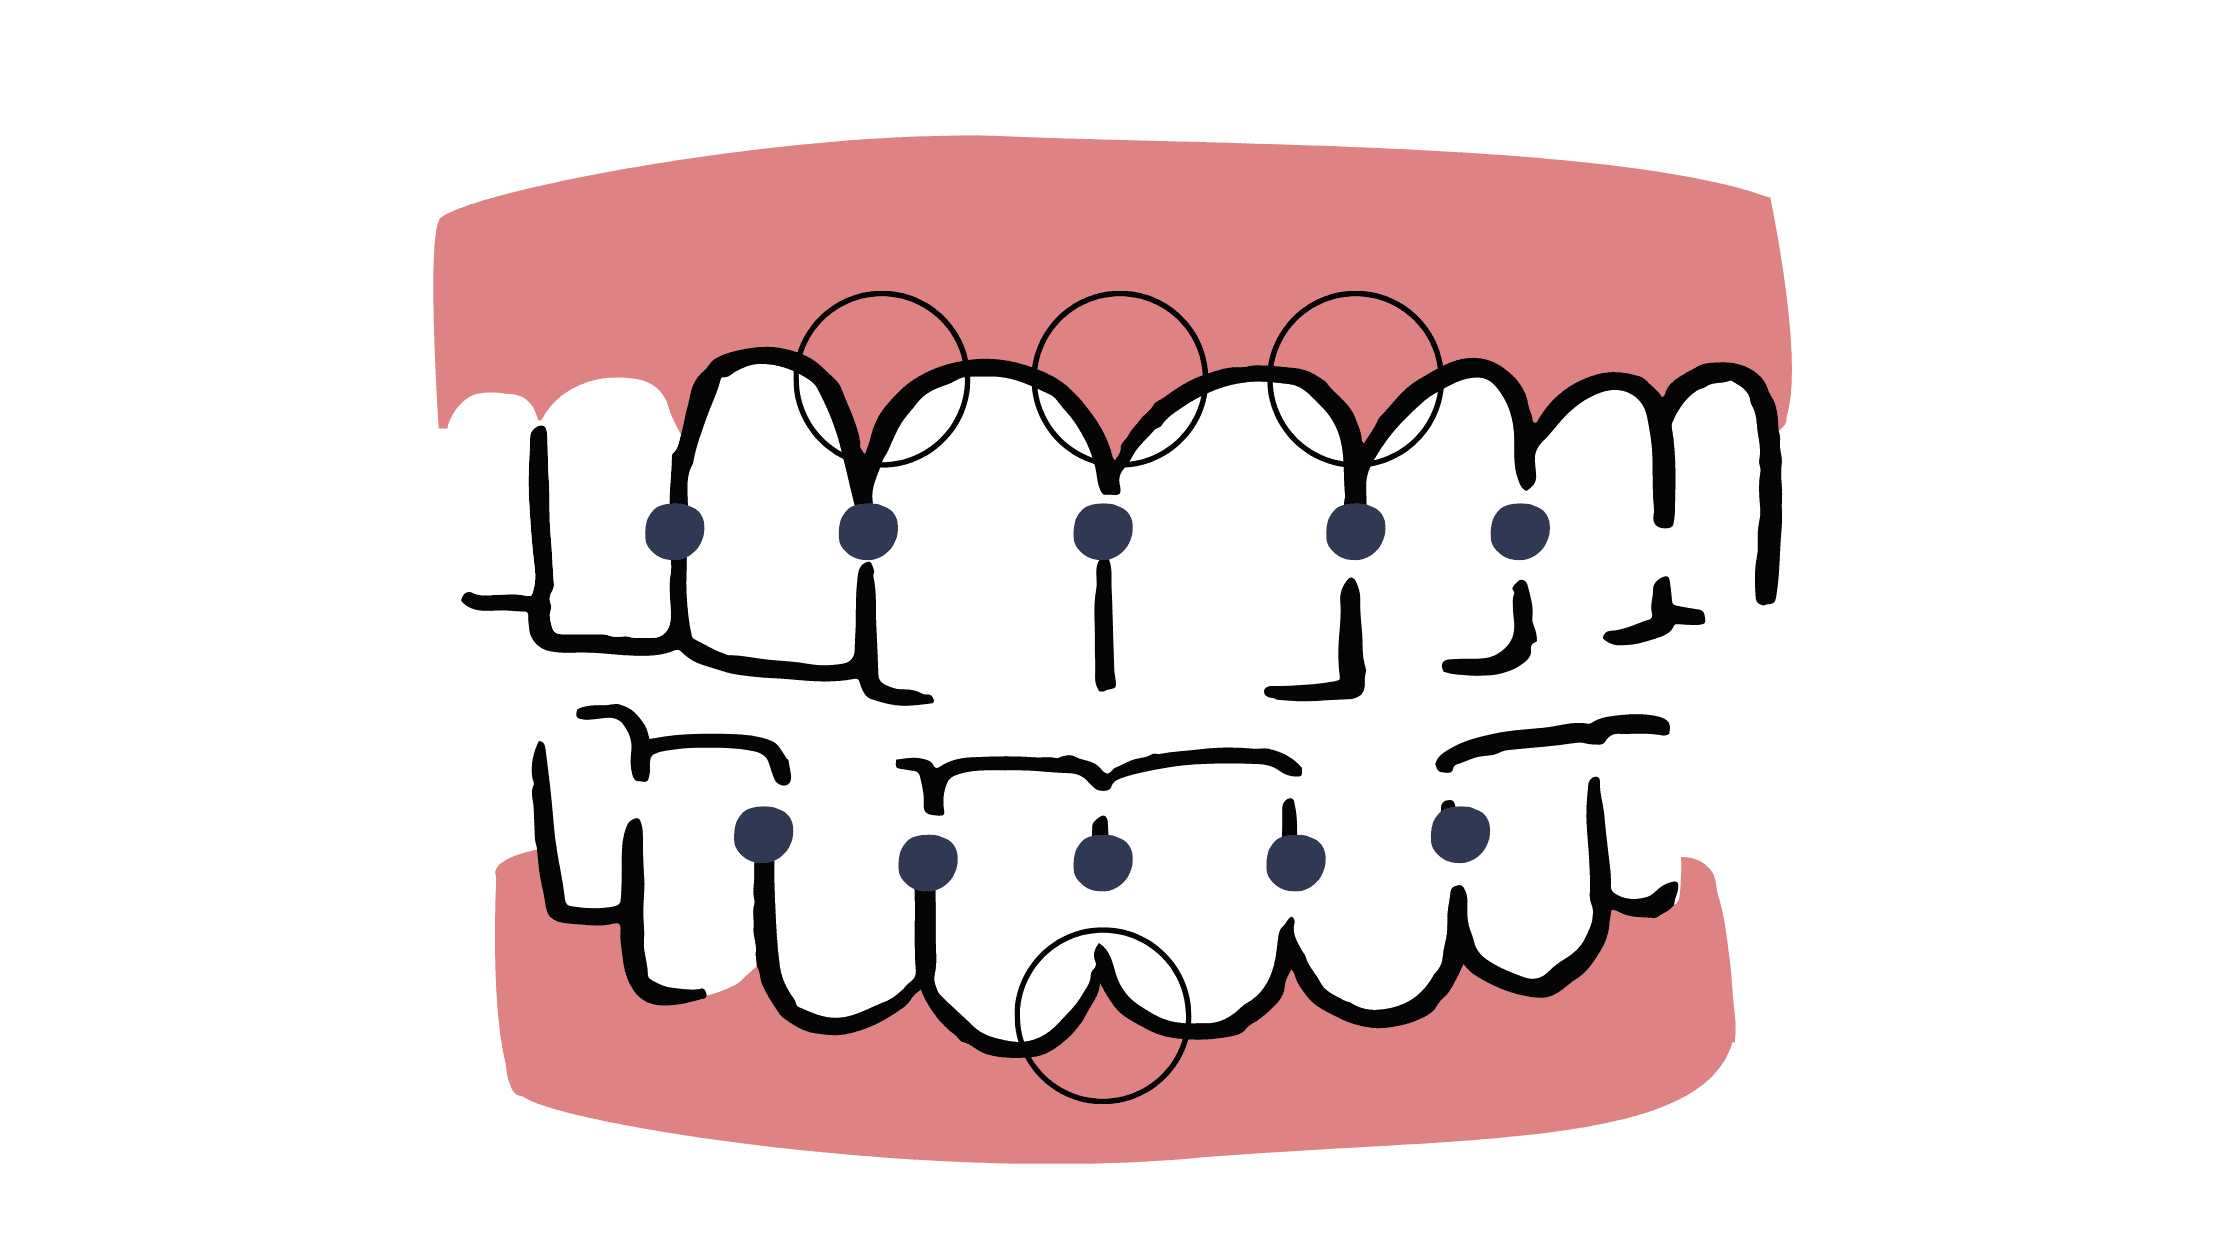 contact between teeth